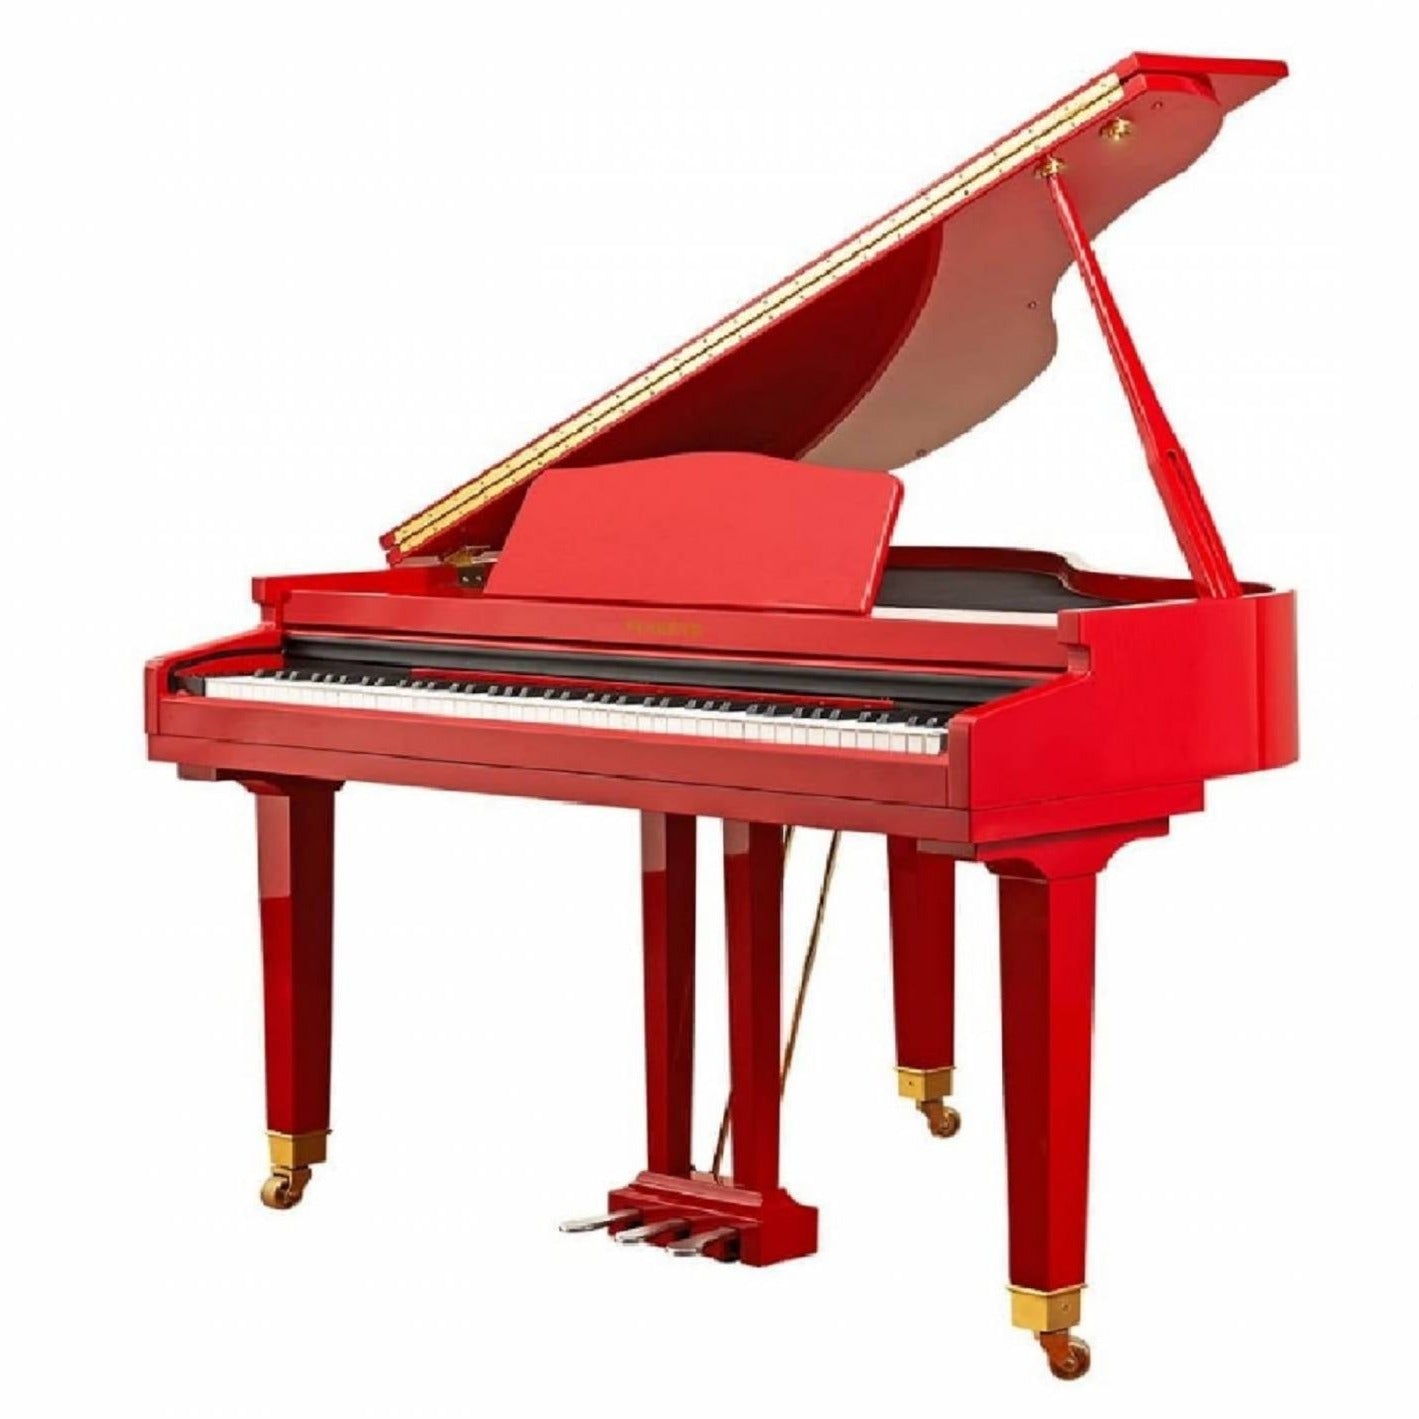 Flykeys FGP110 88-Keys Grand Piano - Red